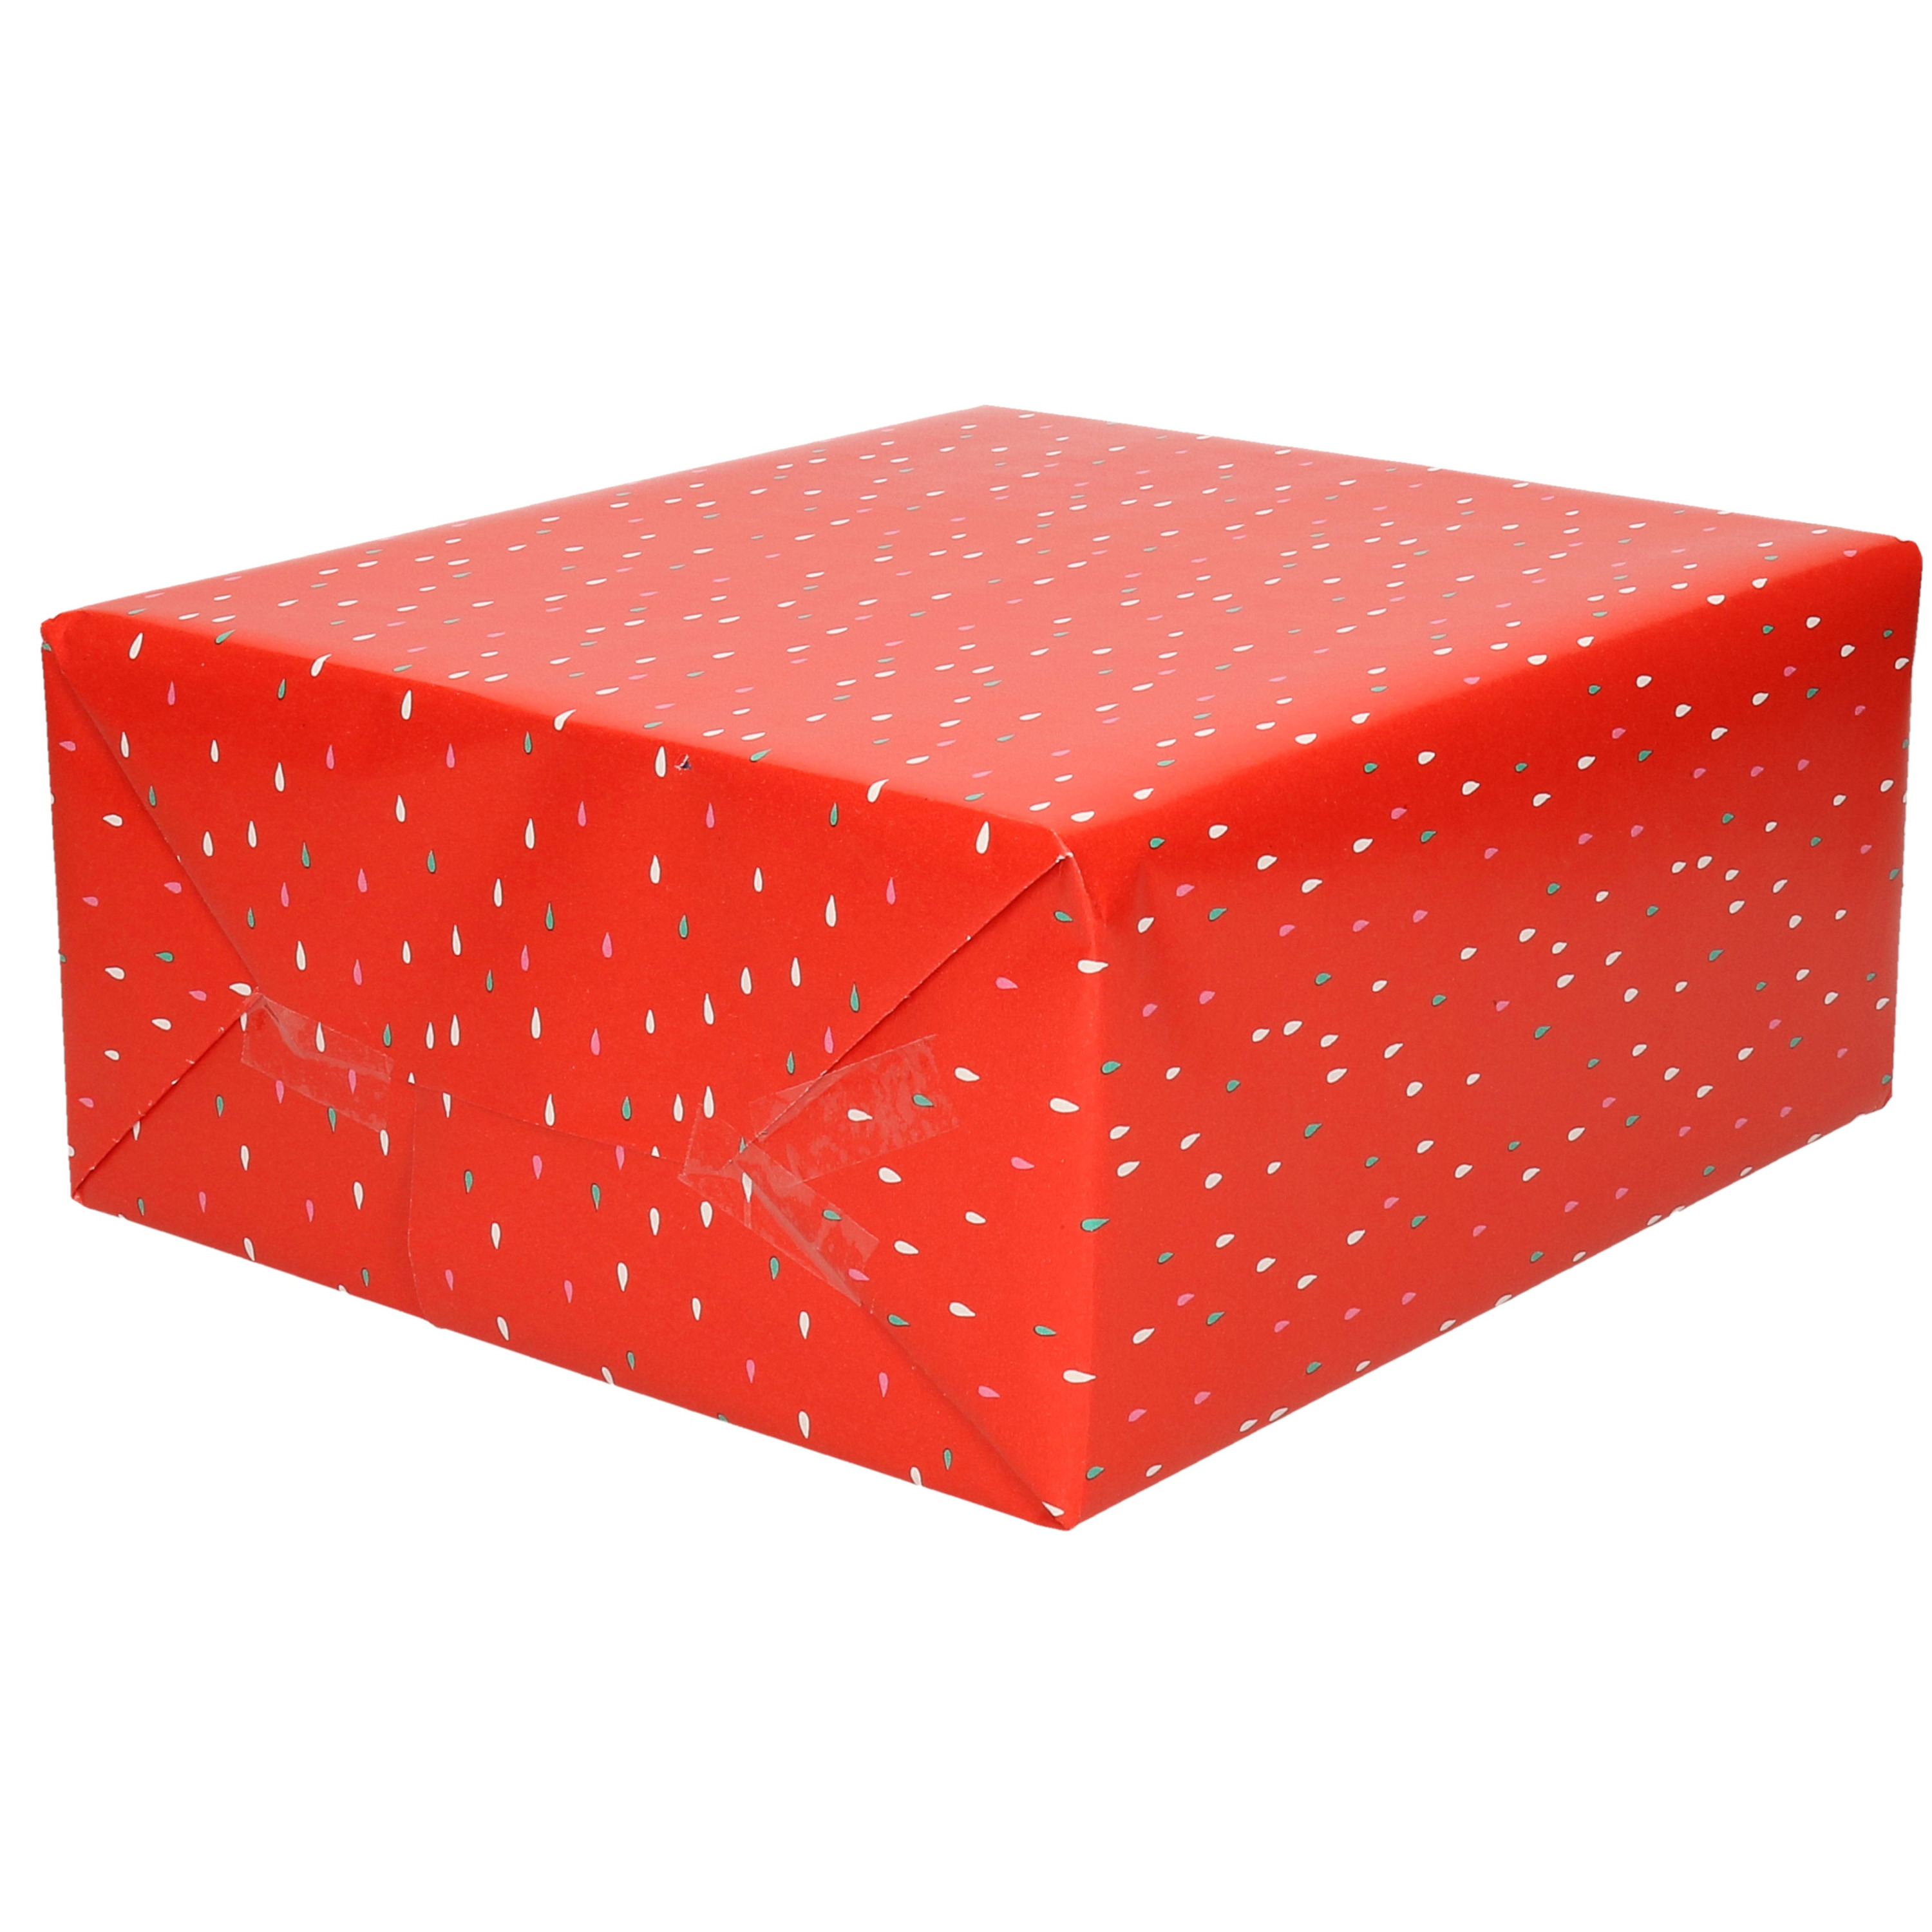 1x Rollen Inpakpapier/cadeaupapier rood met gekleurde druppels print 200 x 70 cm